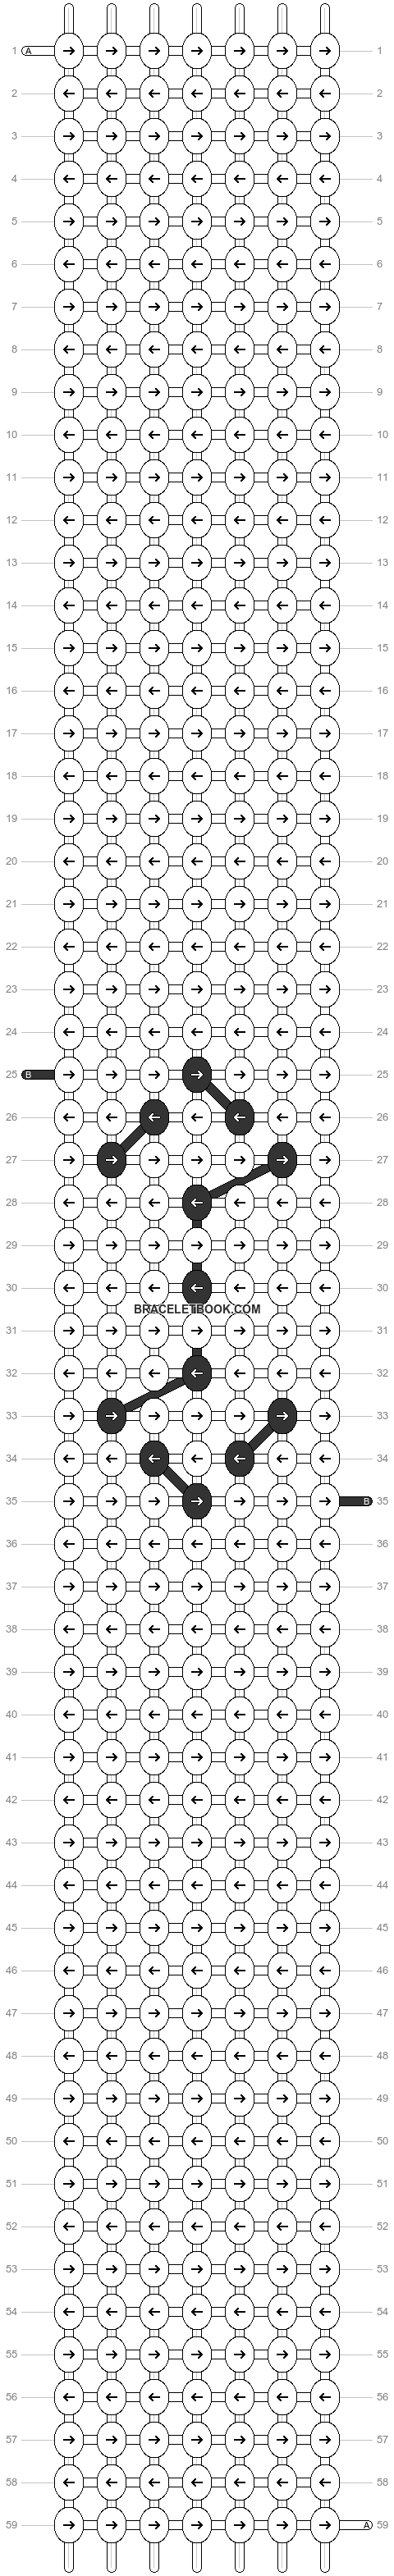 Alpha pattern #31806 variation #21284 pattern